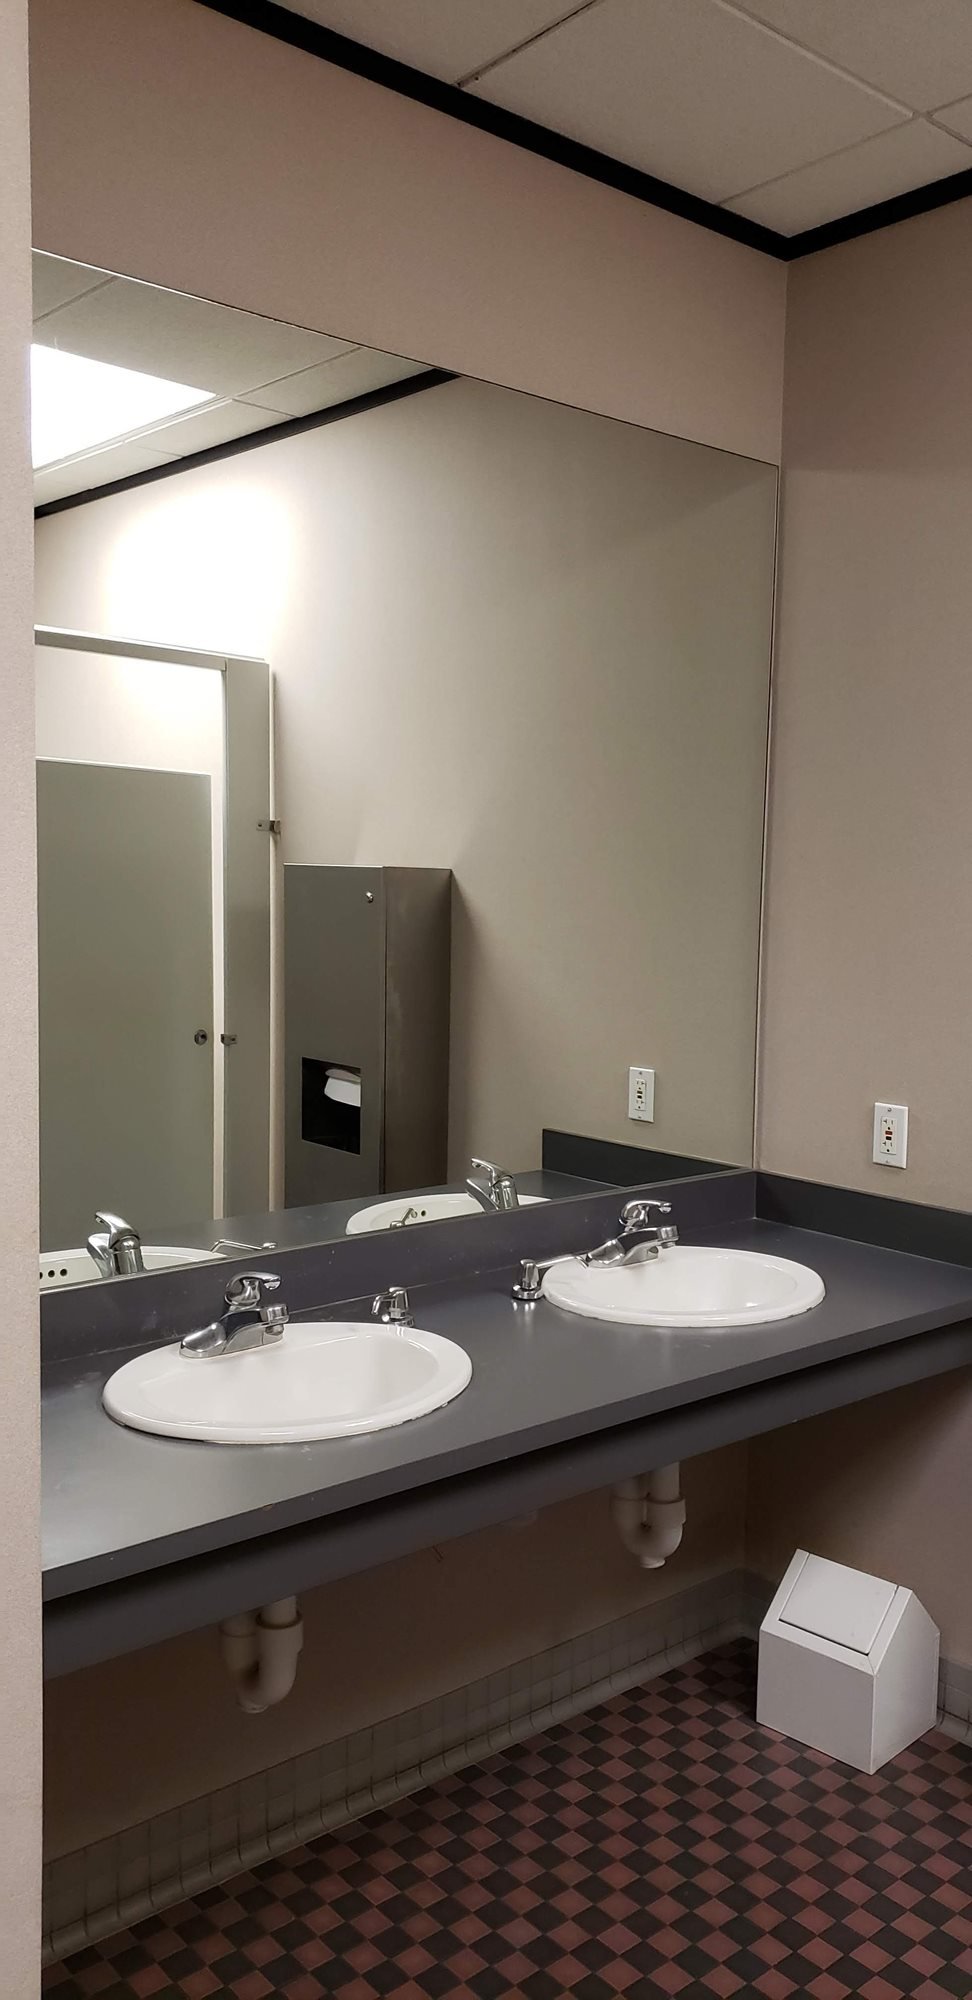 Floors2Interiors Photo Gallery : bathroom double sinks